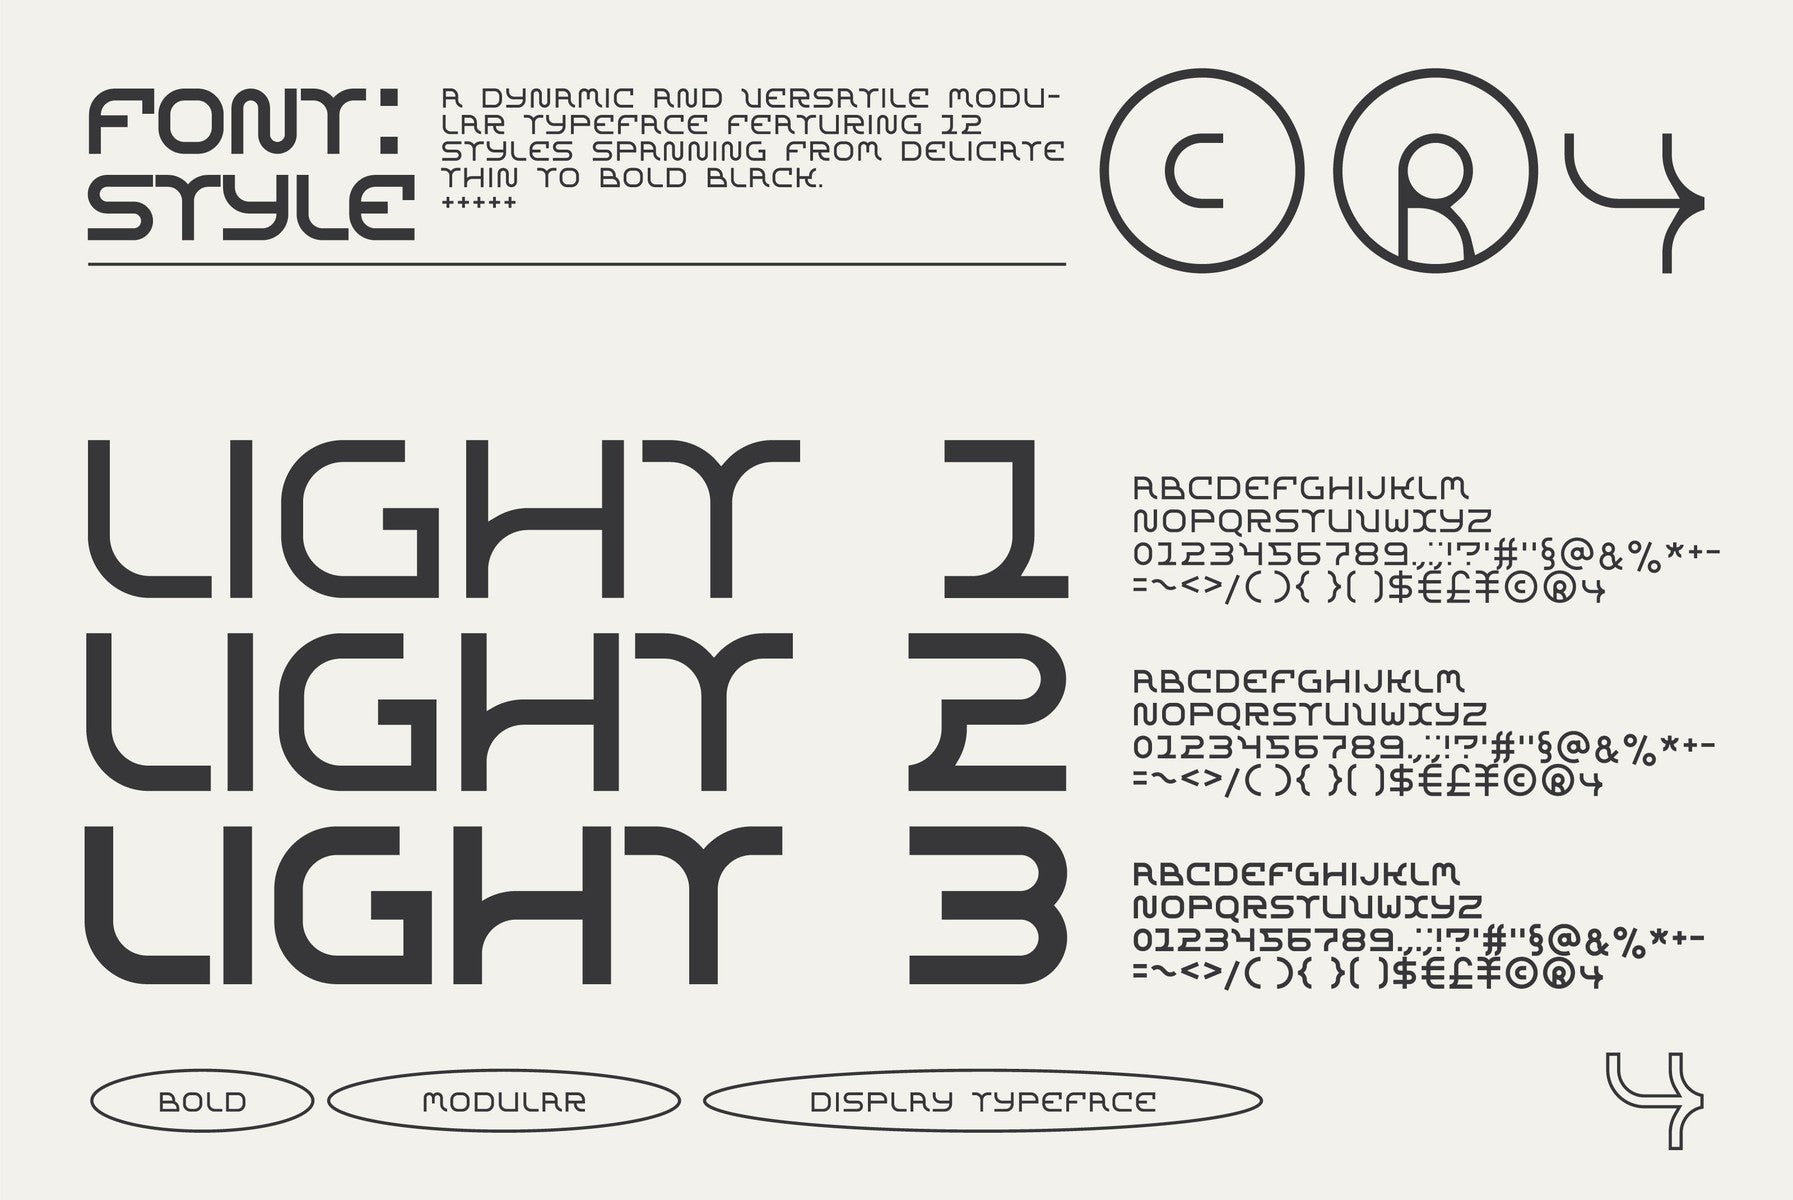 Kesmod Font - 12 styles